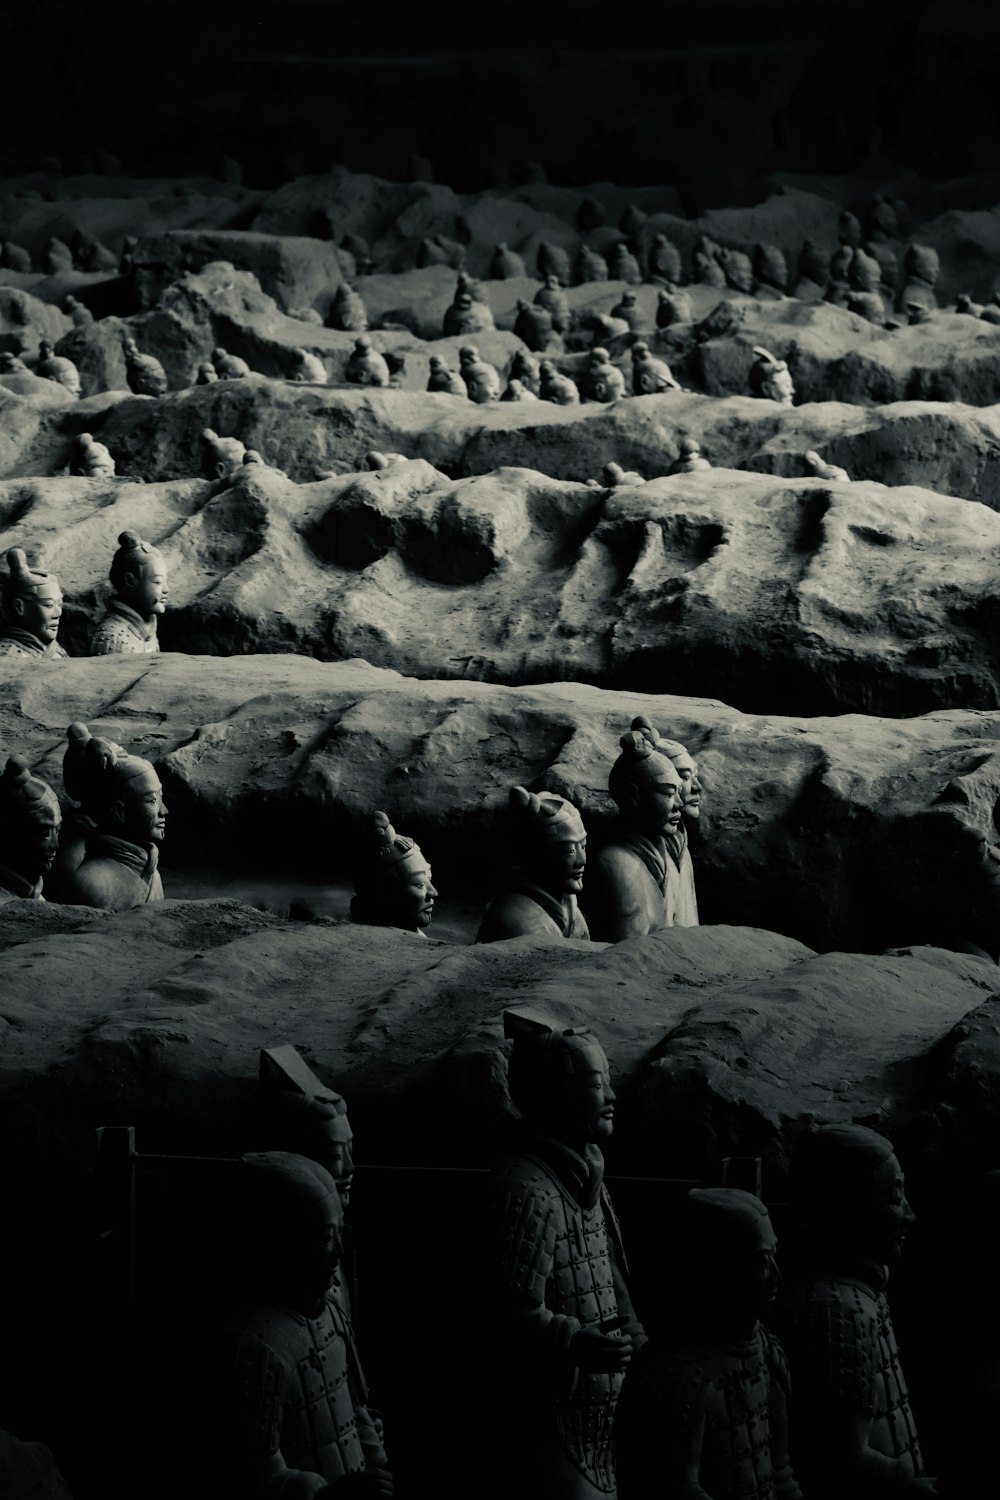 group of penguins on rock formation